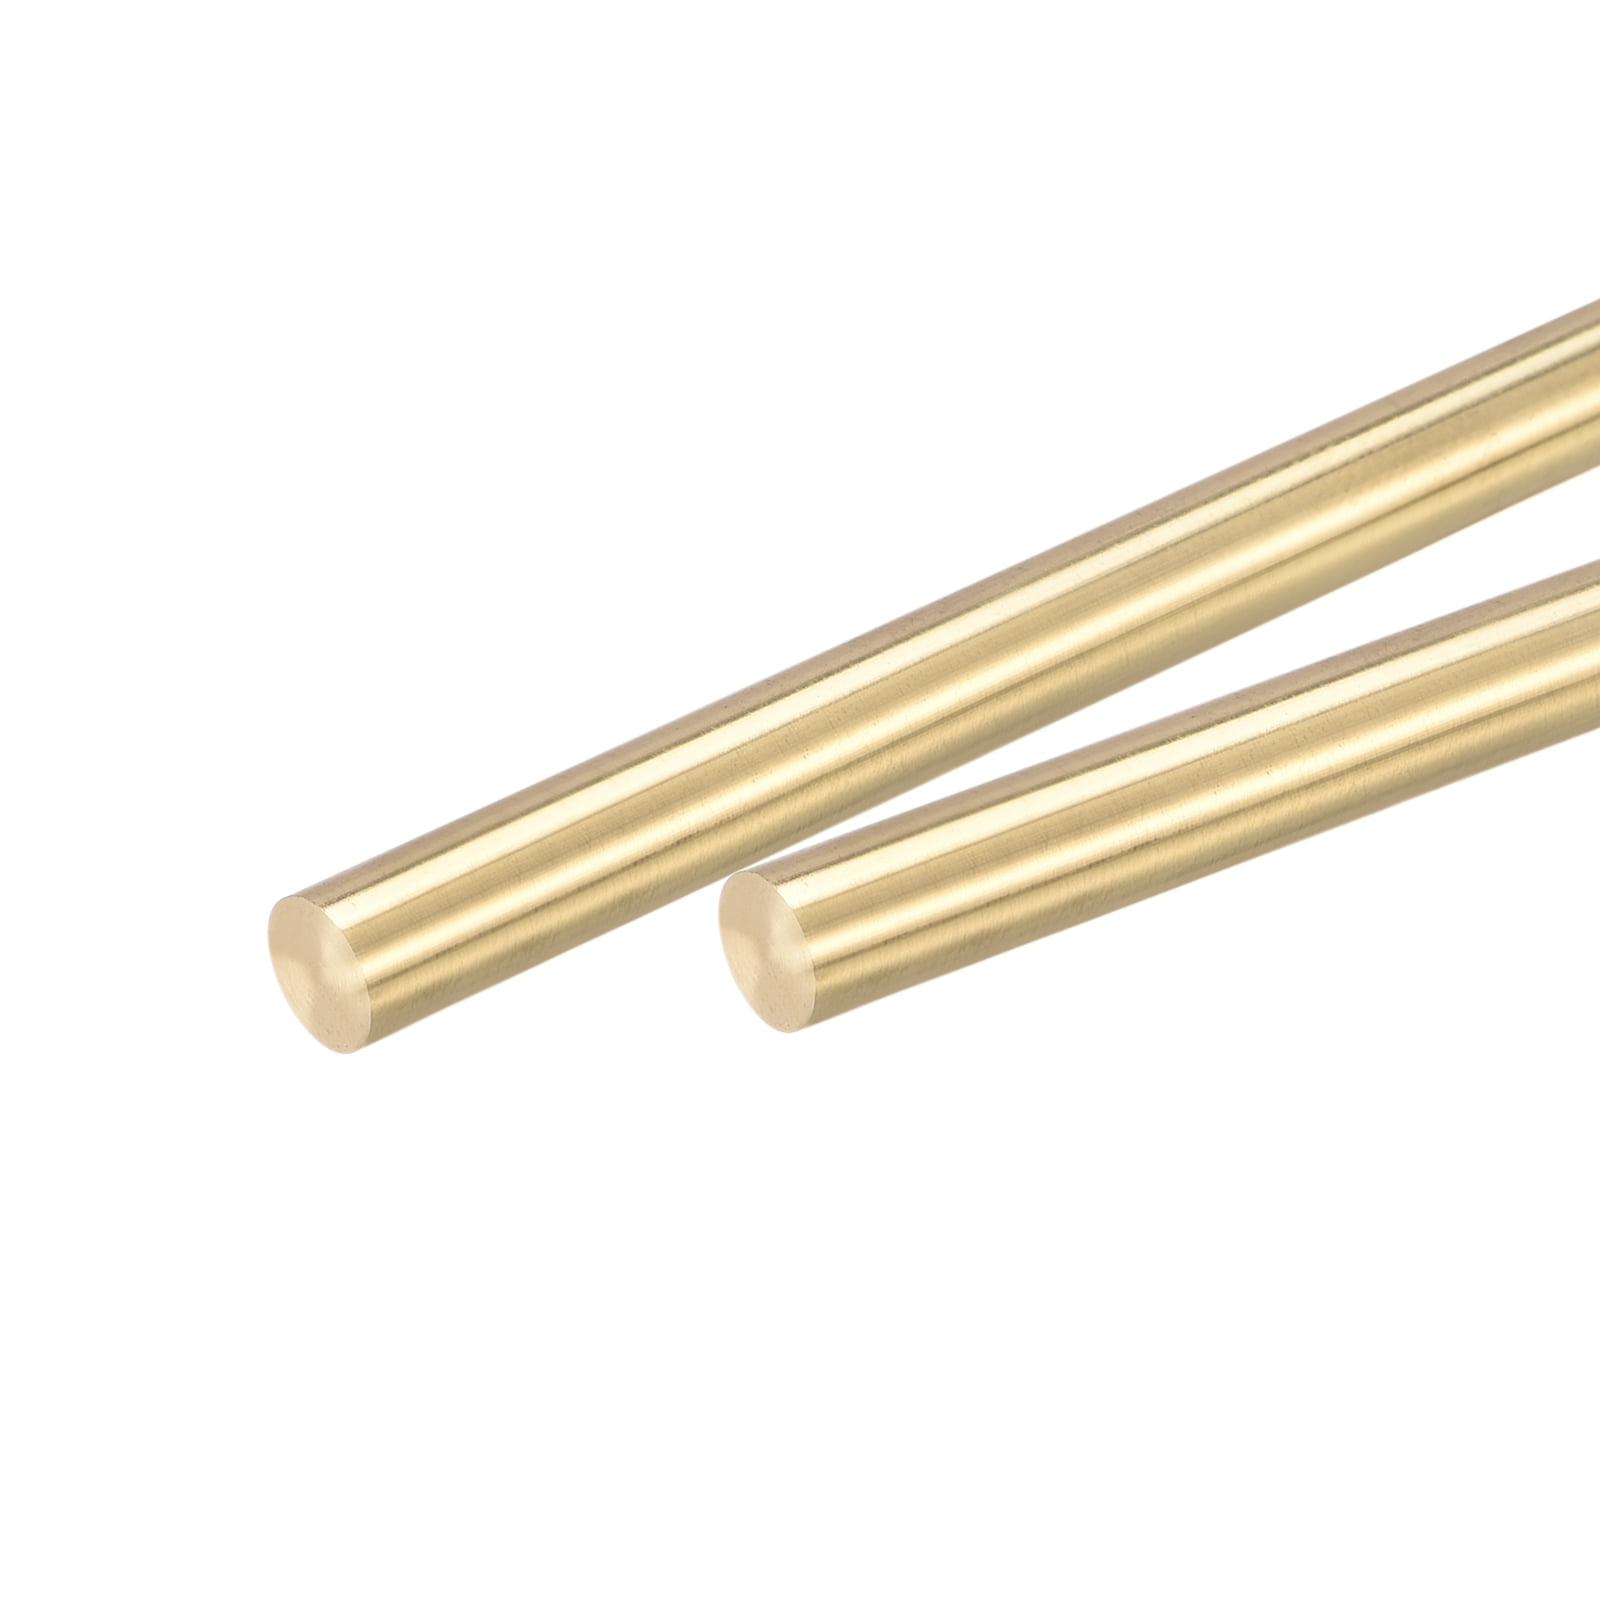 Brass Round Rod 4PCS Brass Round Rods Lathe Bar Stock 1/8 Inch in Diameter 